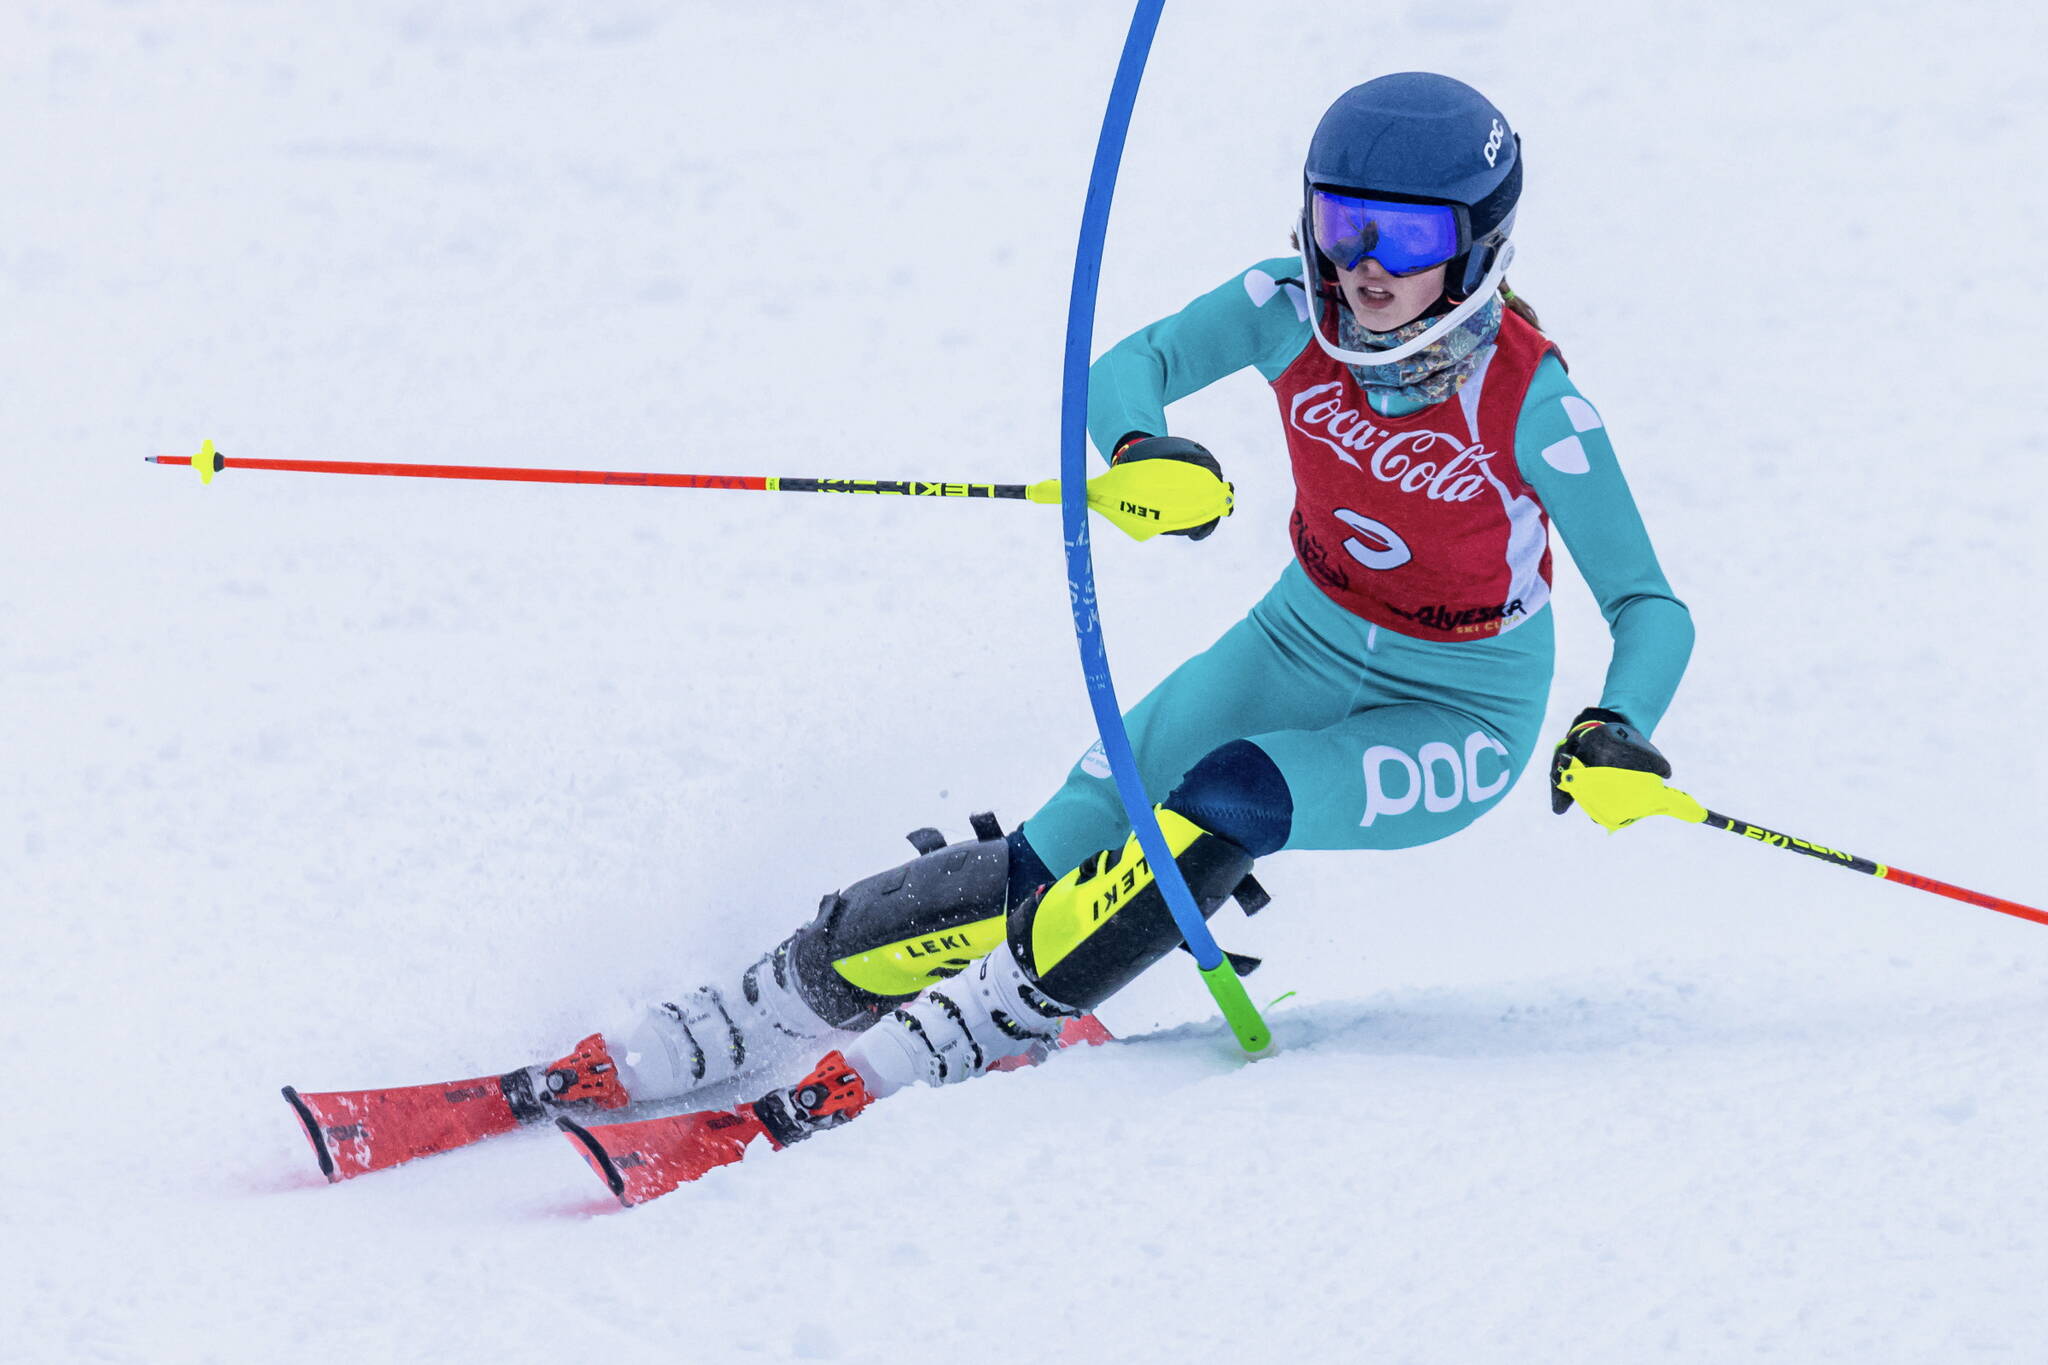 Juneau Ski Club U16 racer Eva Meyer competes in a slalom run during the Coca-Cola Classic Sunday at Girdwood. (Photo courtesy Bob Eastaugh)